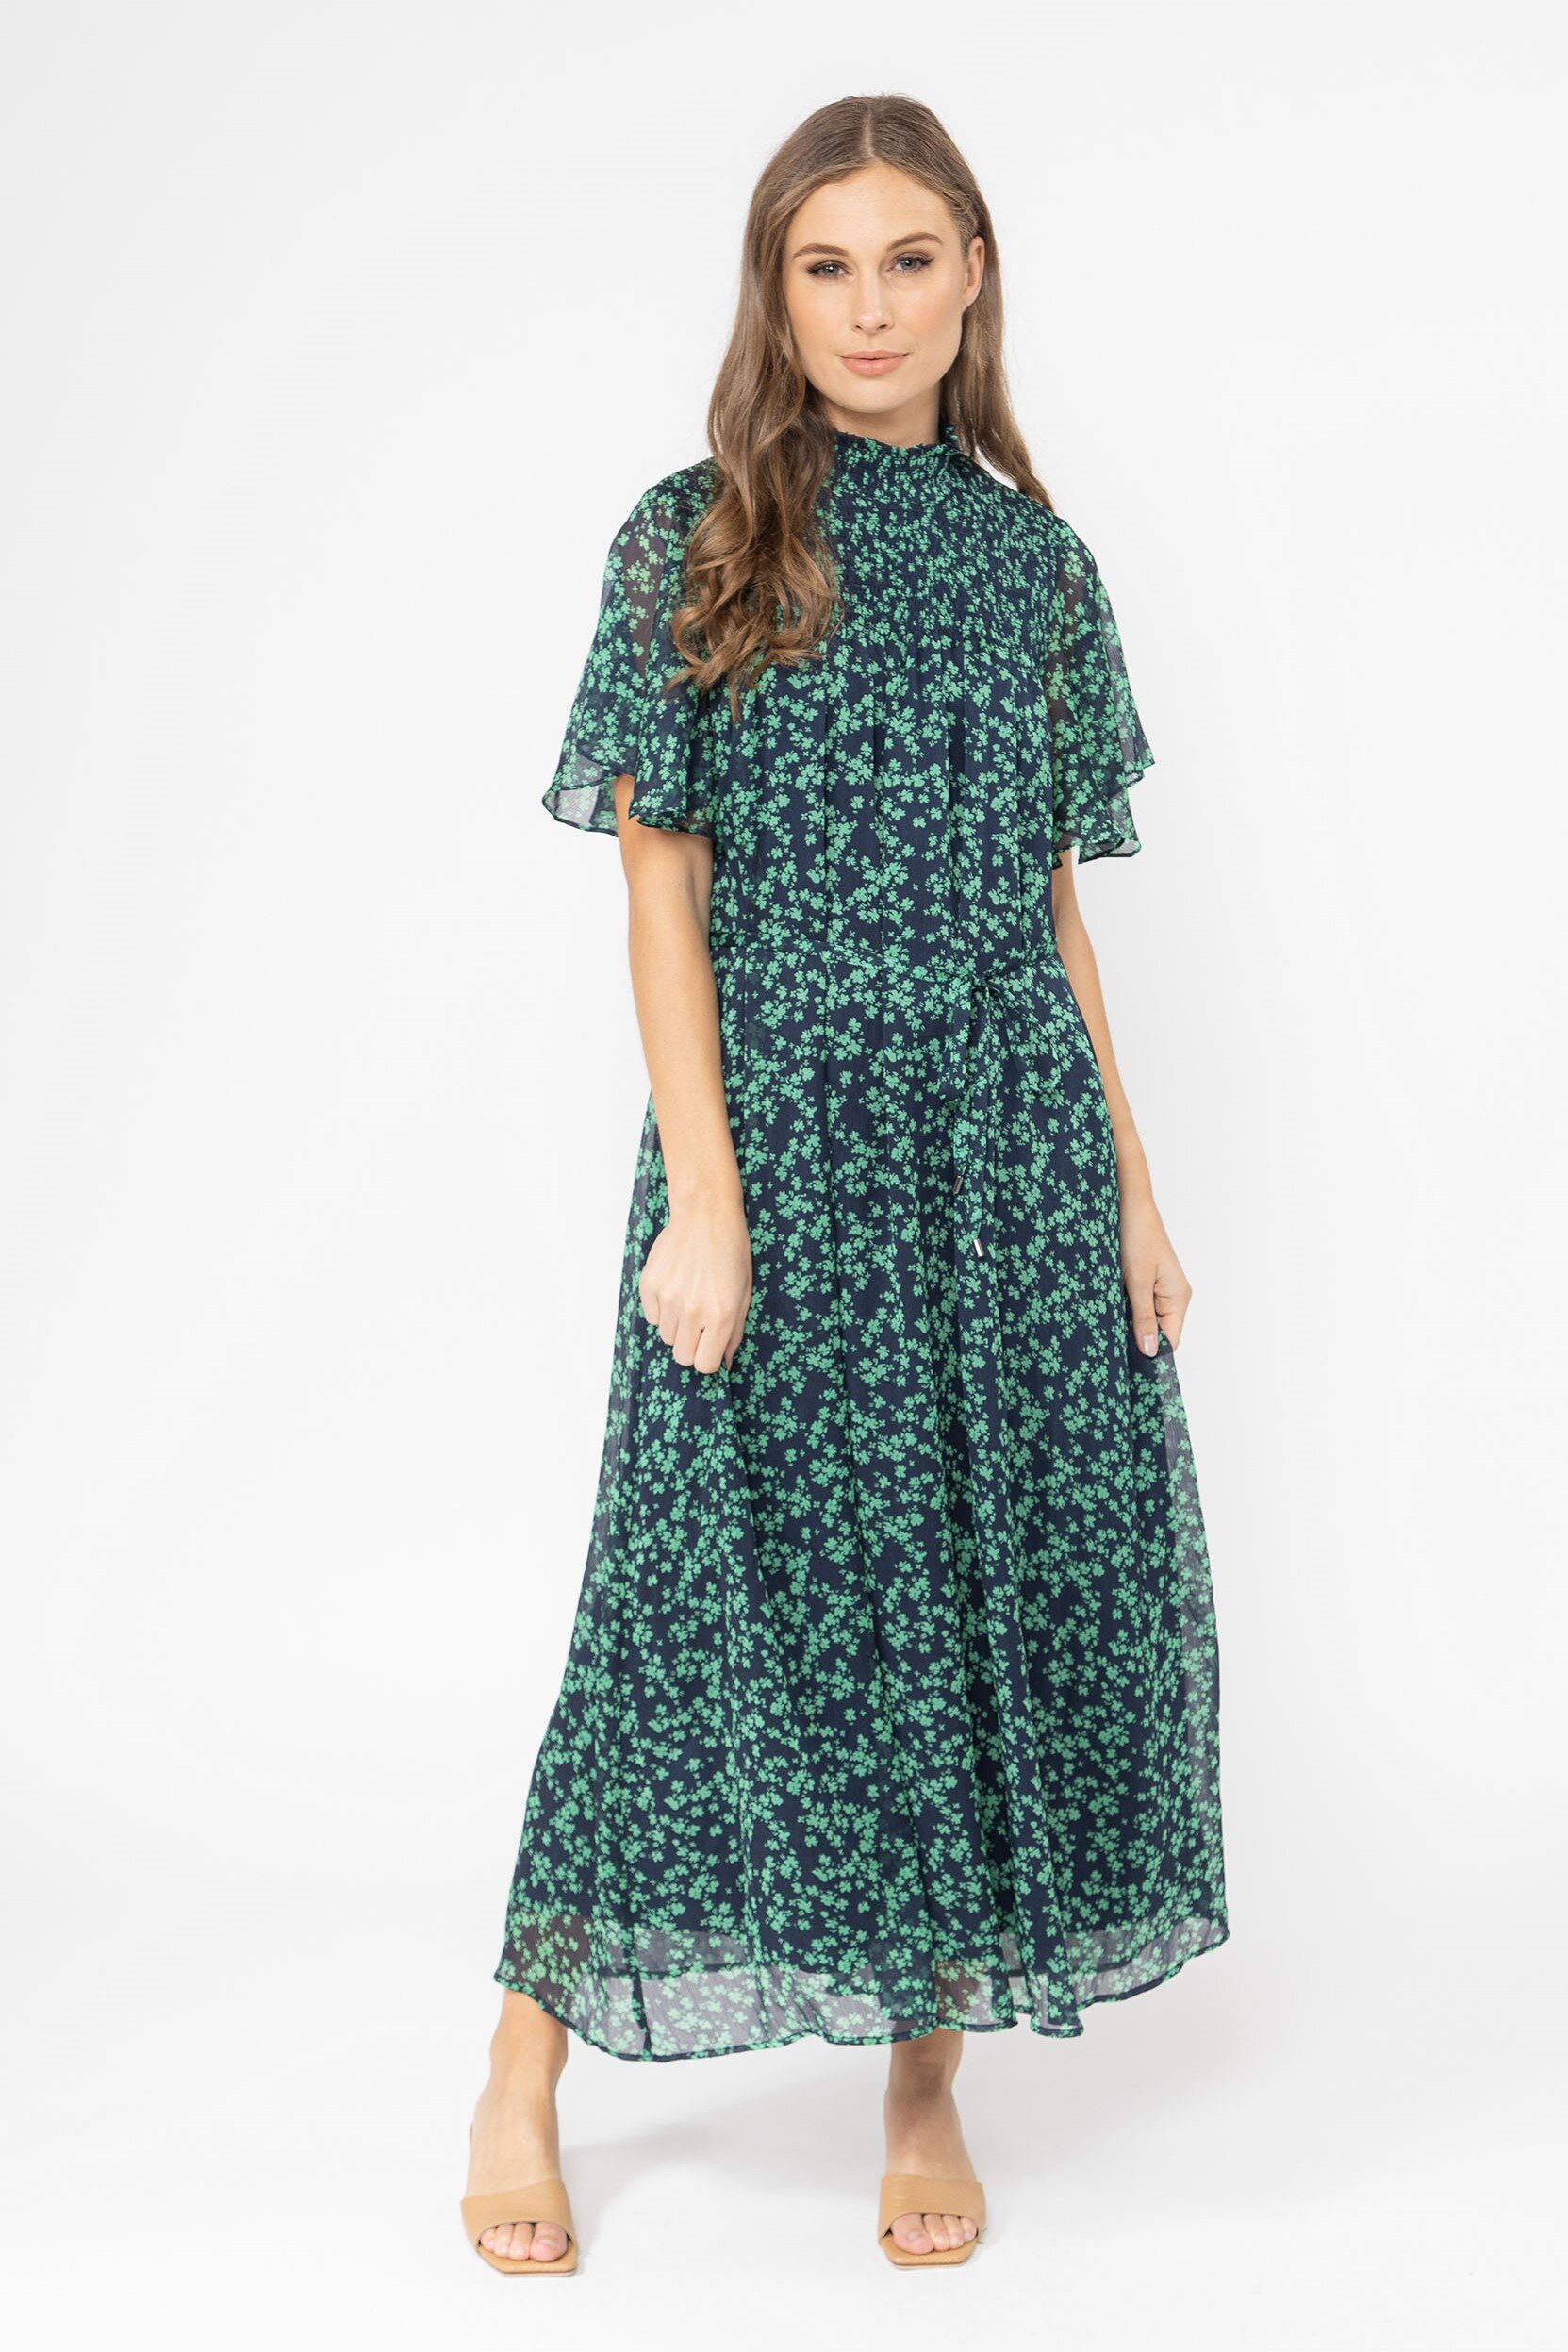 Vibrant Maxi Dress (Navy Emerald) - Labels-Seeking Lola : Just Looking ...